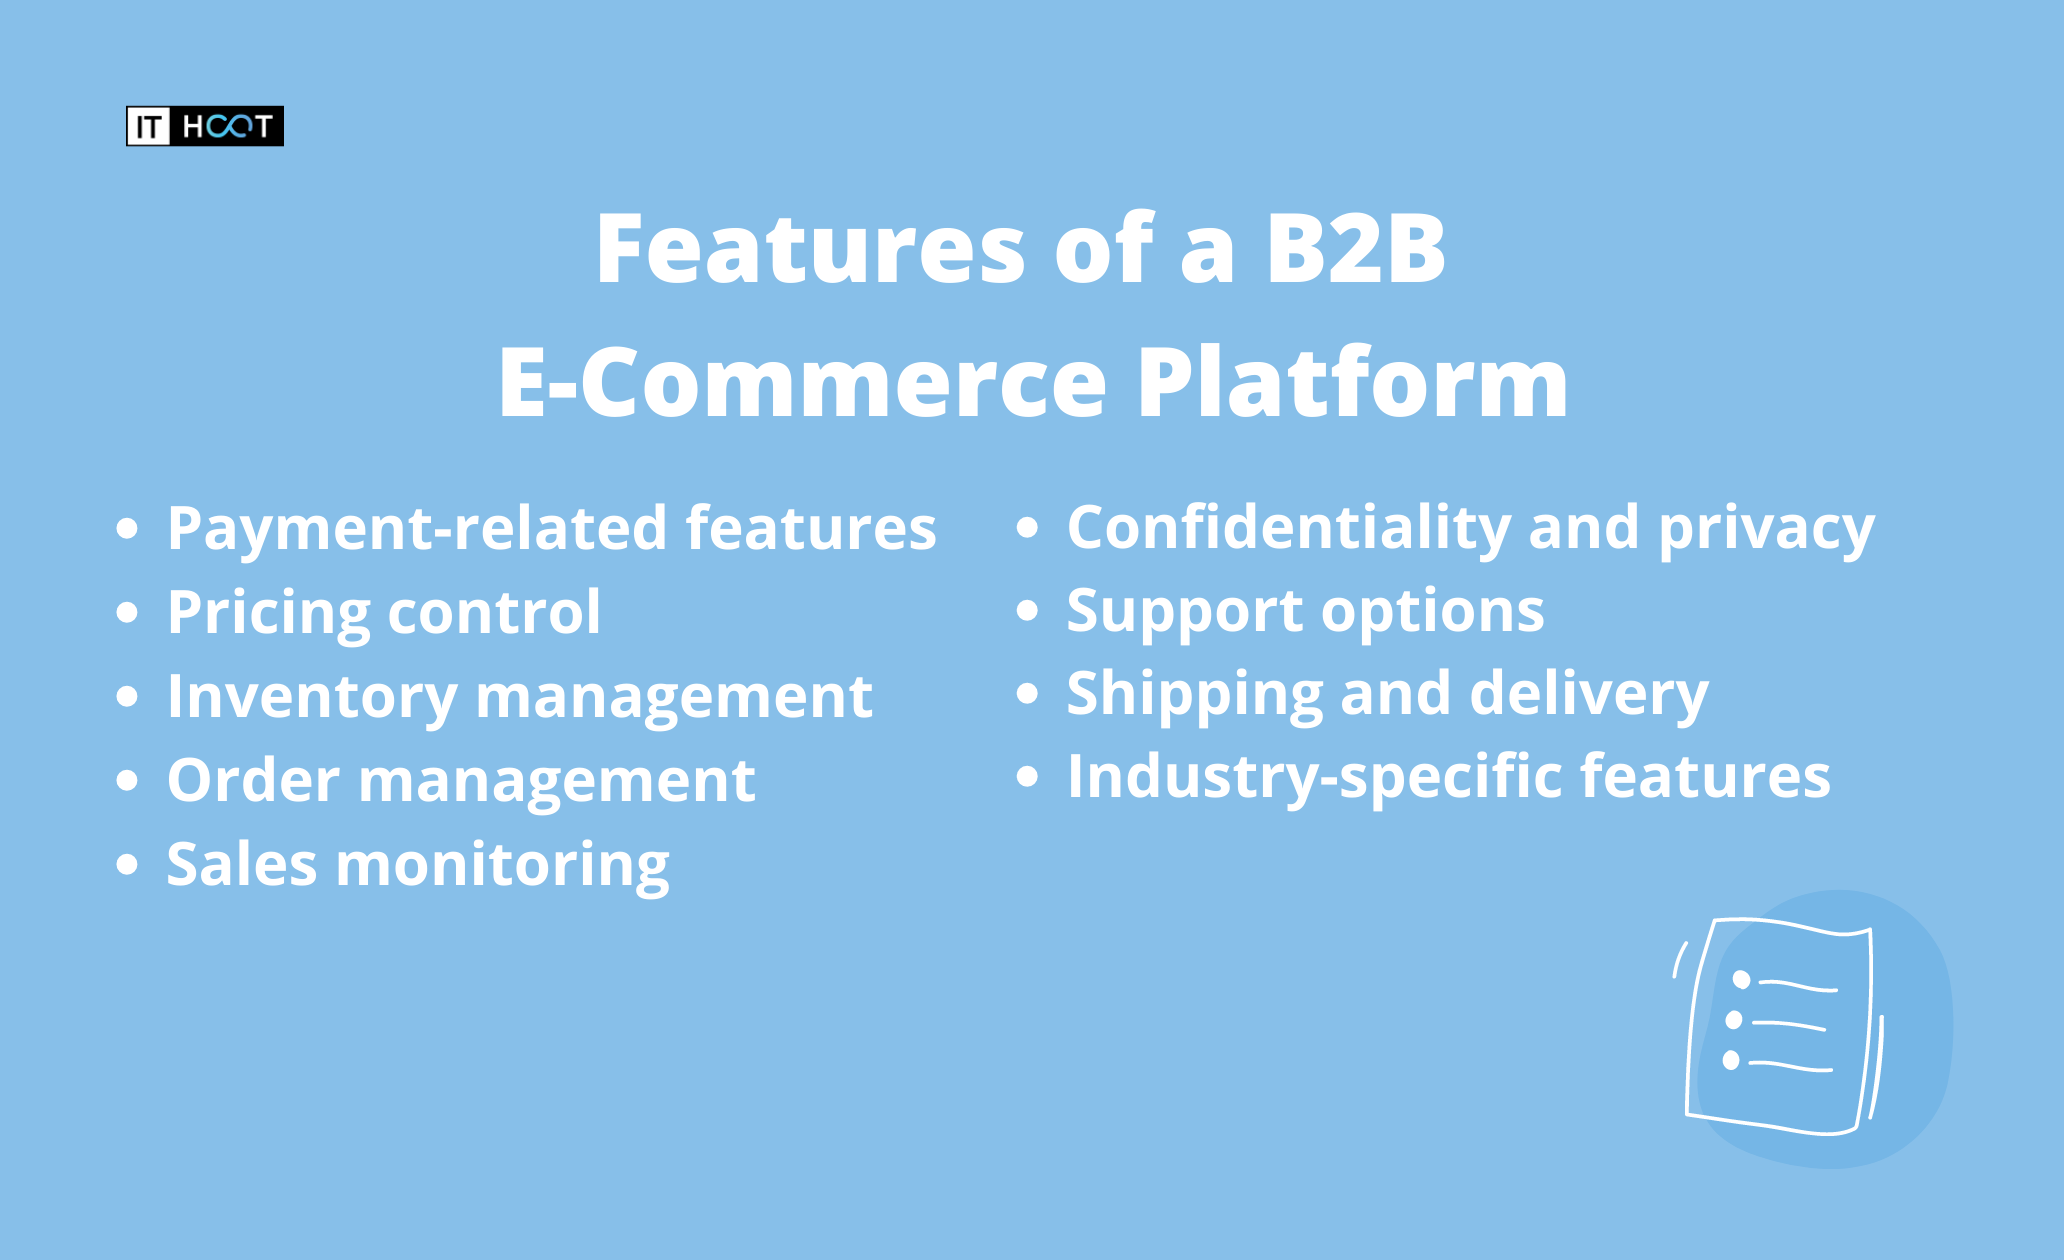 B2B E-Commerce marketplace features